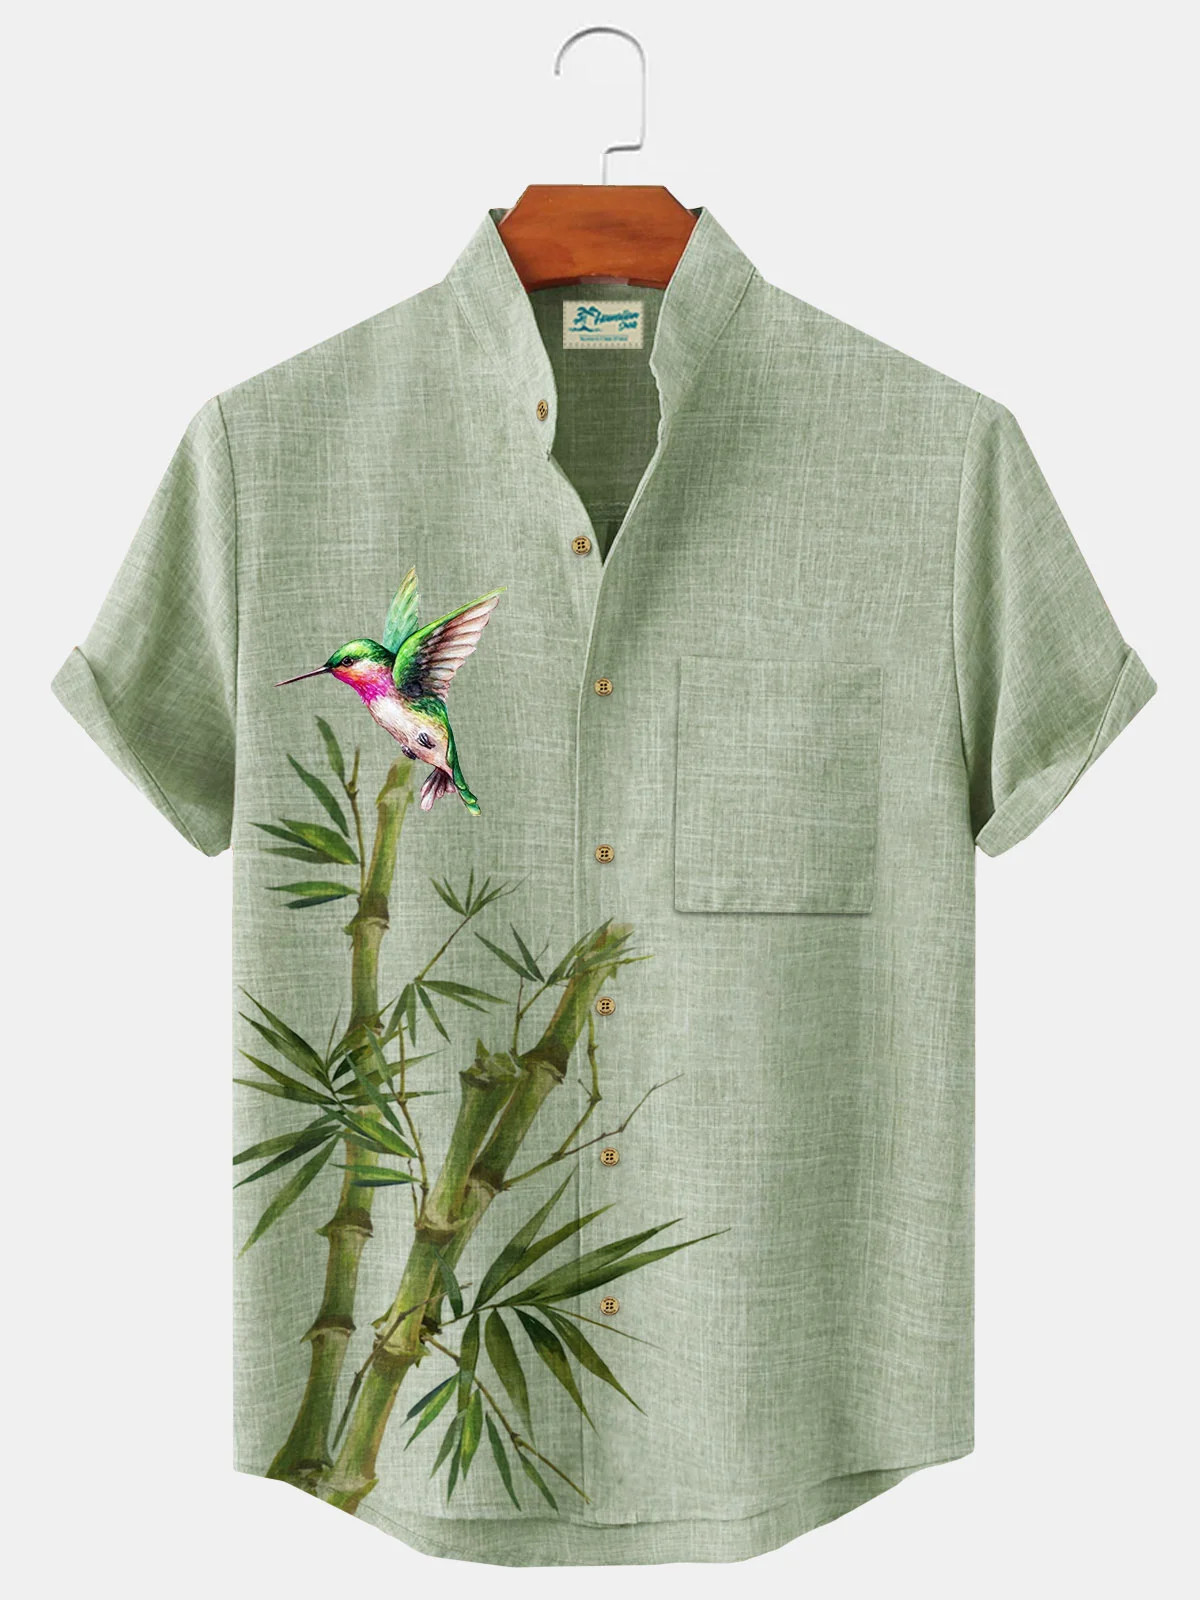 Royaura Vintage Beach Holiday Light Green Men's Stand Collar Shirts Bamboo Parrot Stretch Plus Size Aloha Camp Shirts